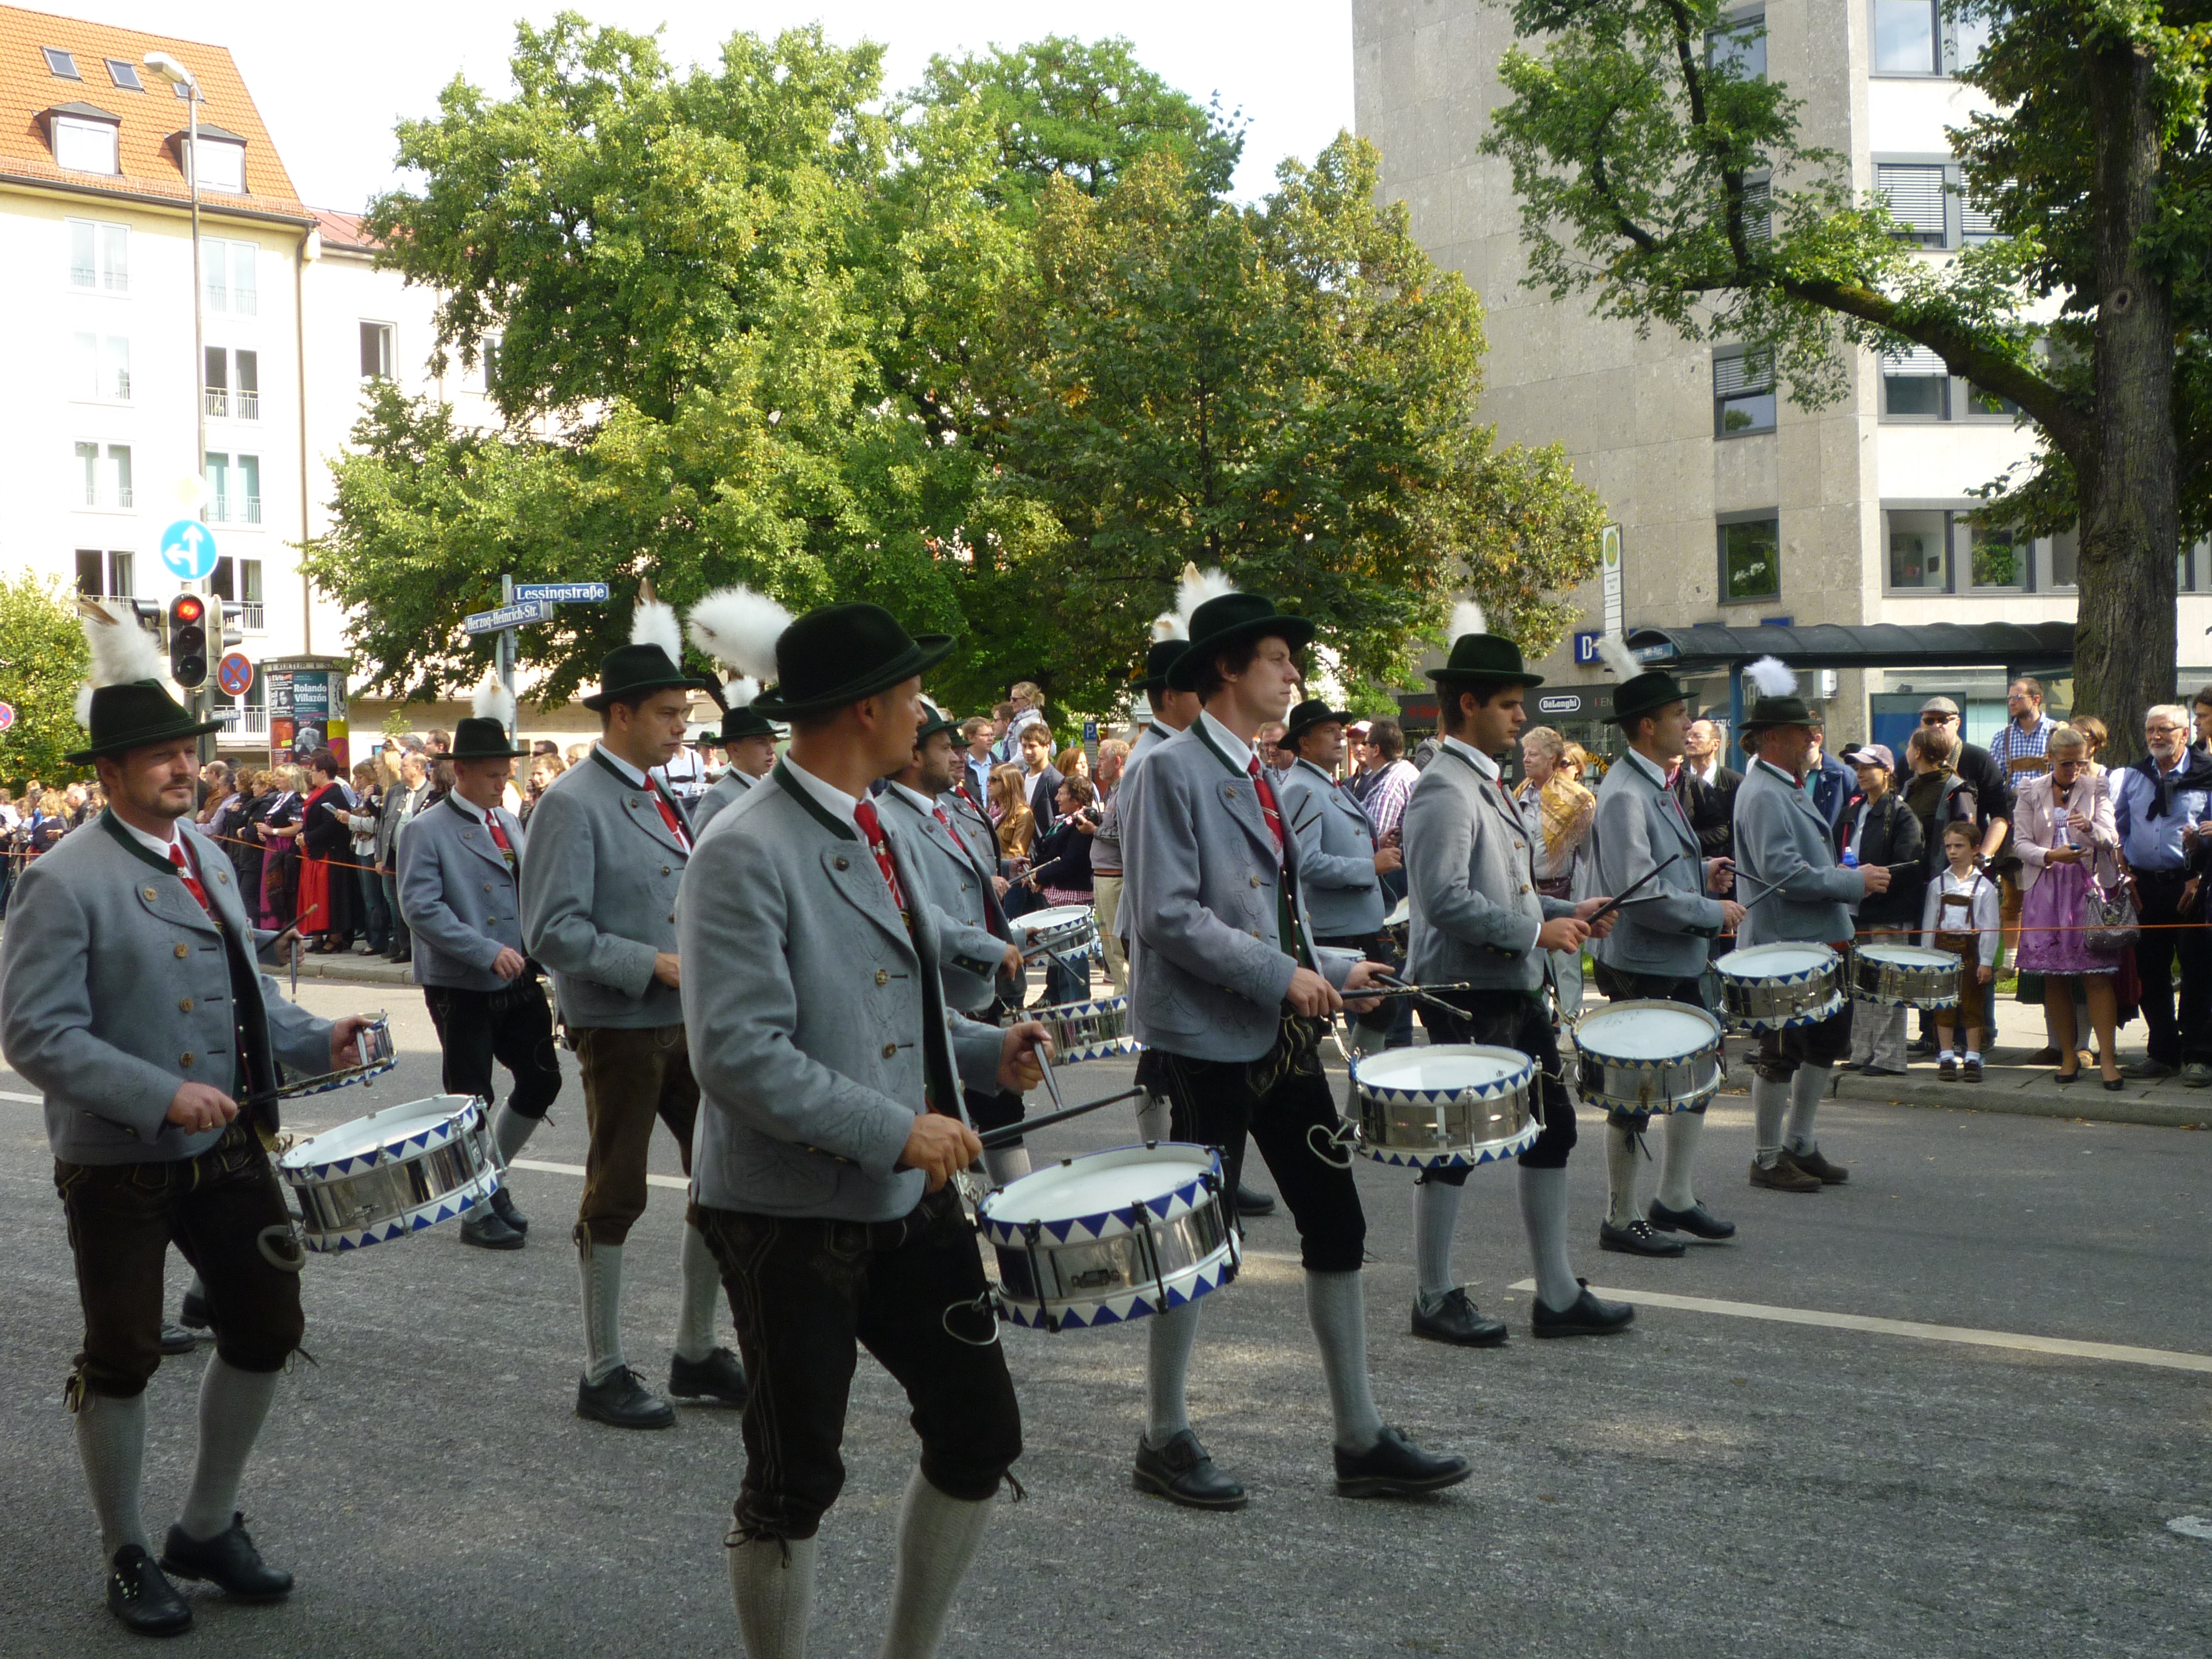 A Londoner from Afar Goes to Munich1 - Oktoberfest Parade5